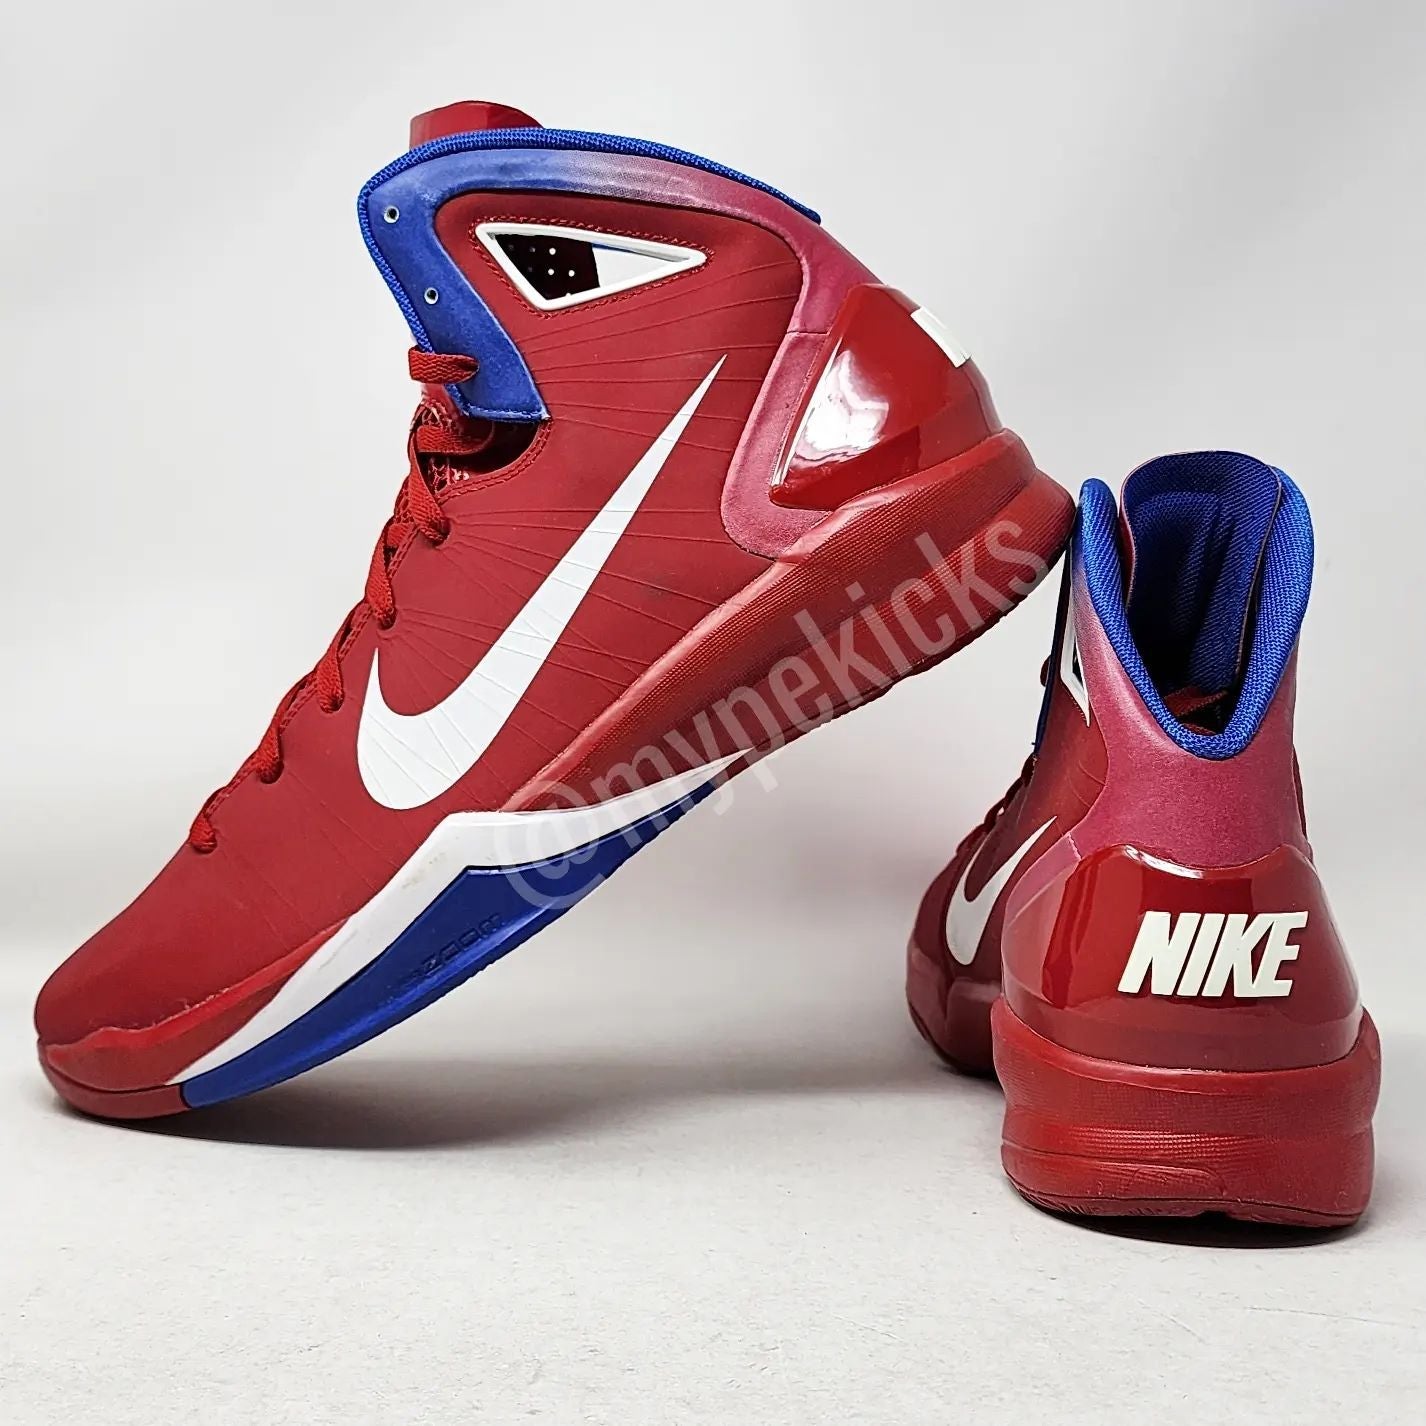 Nike Hyperdunk 2010 - Andre Iguodala Philadelphia 76ers PE